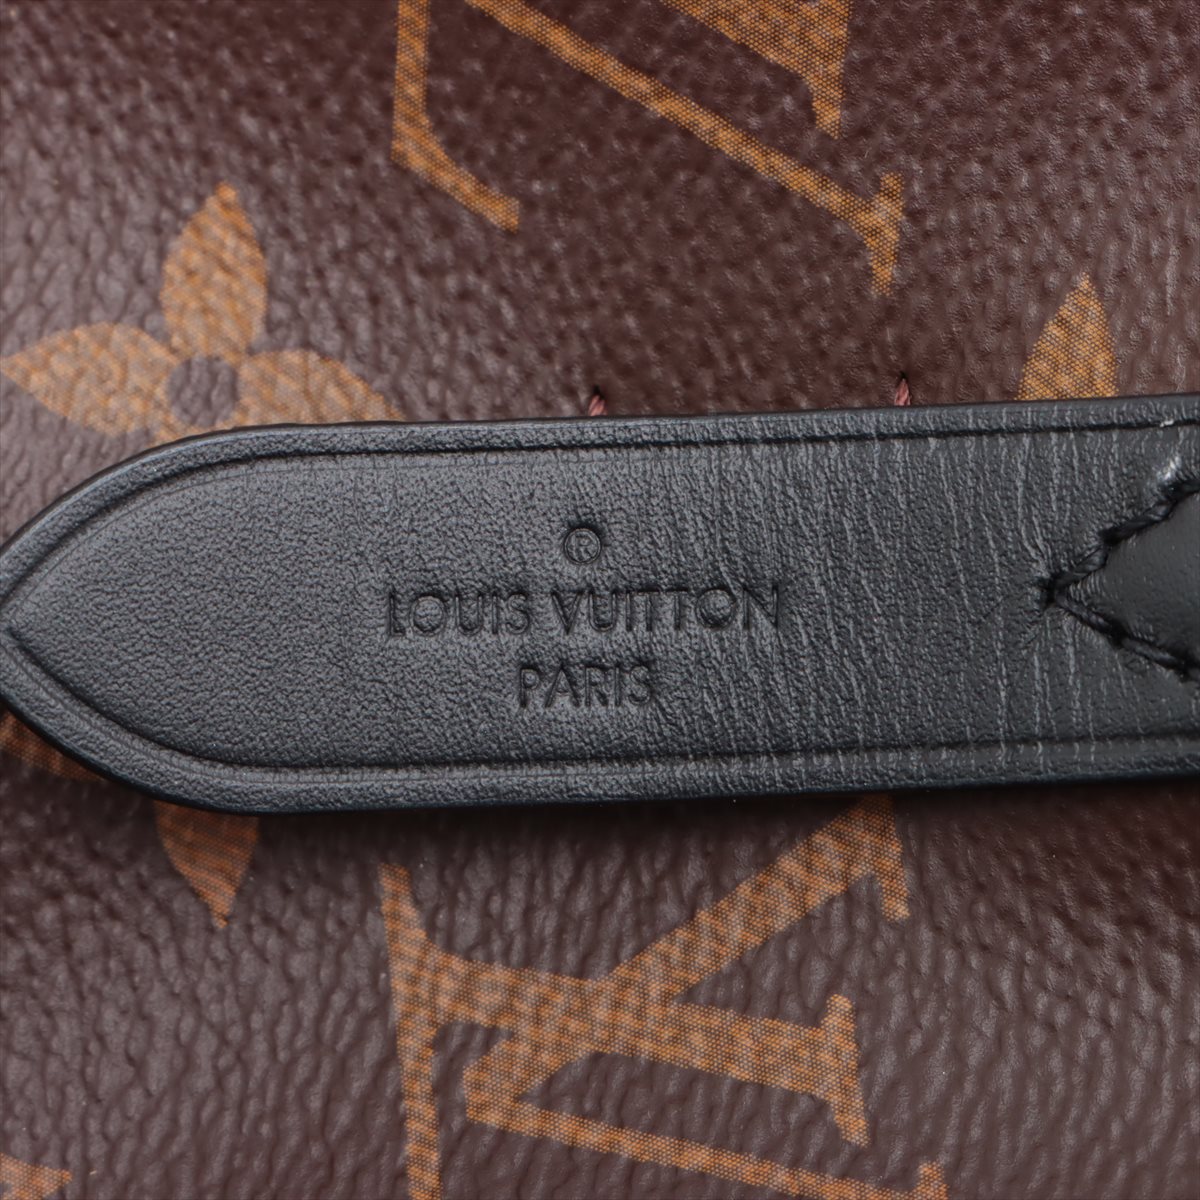 Louis Vuitton Mono Mono M44020